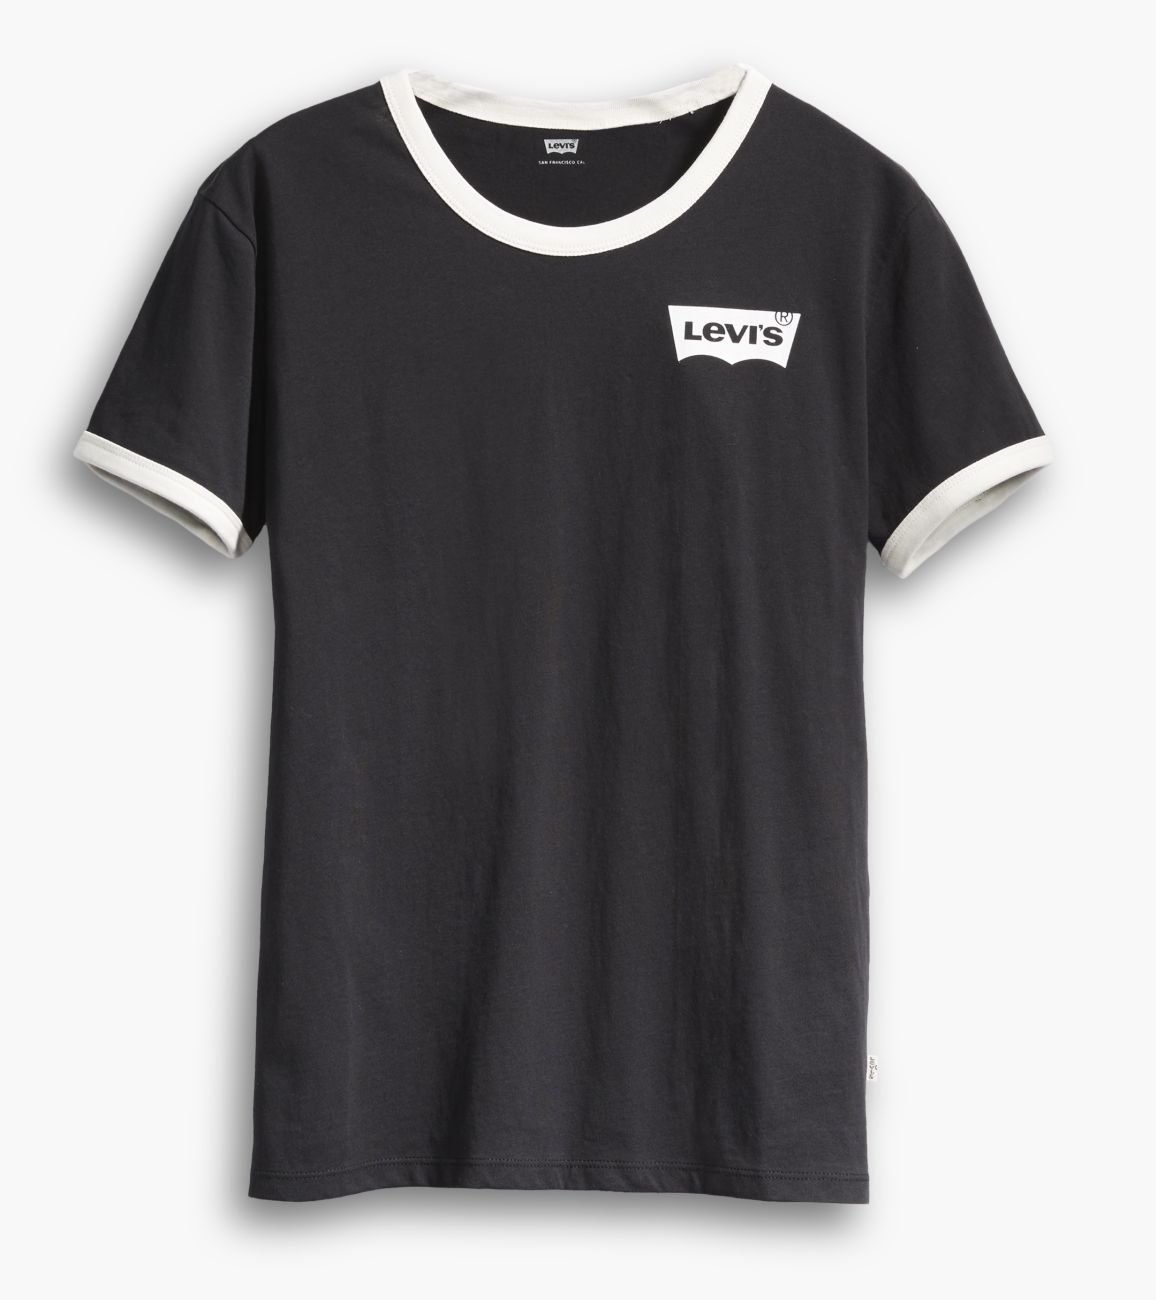 LEVIS Shirts f. Damen T-Shirt 35793-0001 schwarz W18-LDT1